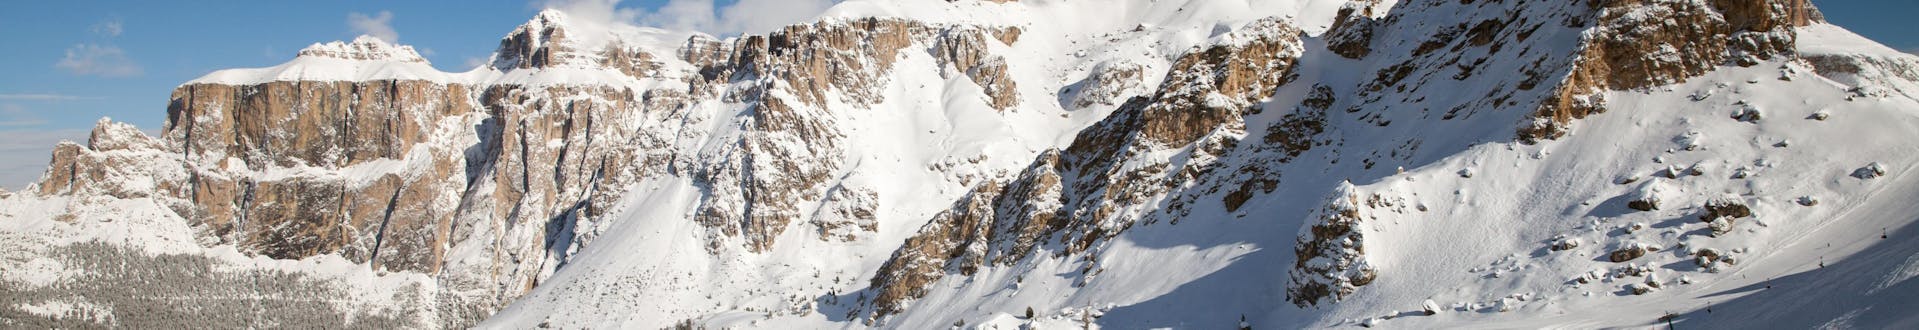 Skigebied in Canazei, Italië, waar je skilessen kunt boeken.